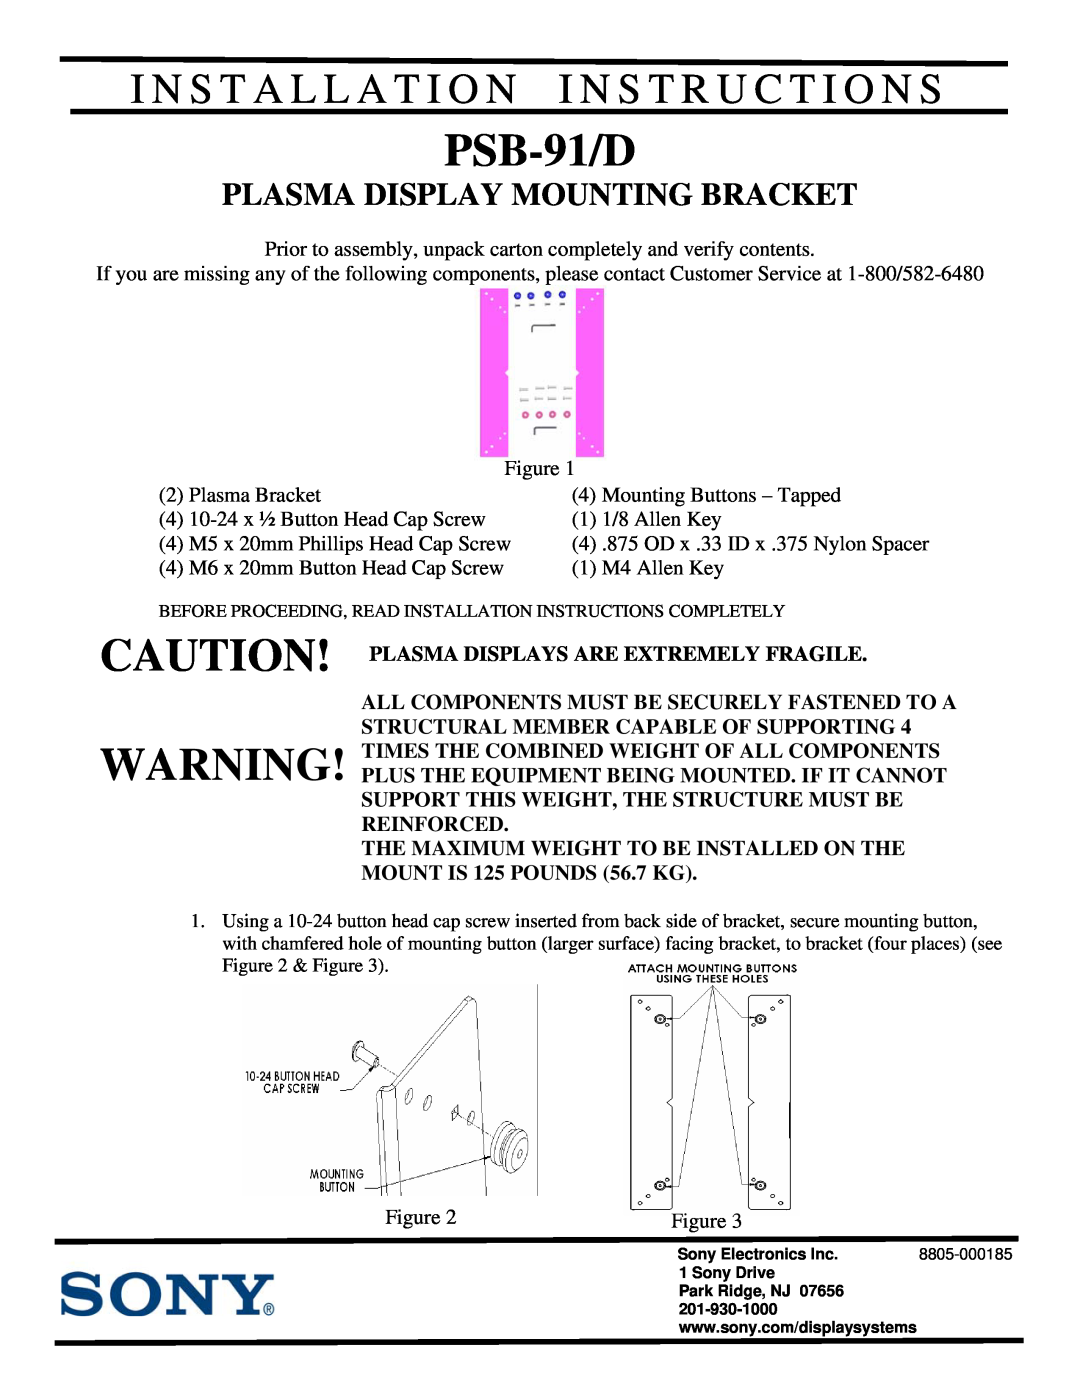 Sony PLP-91/D I N S T A L L A T I O N I N S T R U C T I O N S, PSB-91/D, Plasma Display Mounting Bracket 